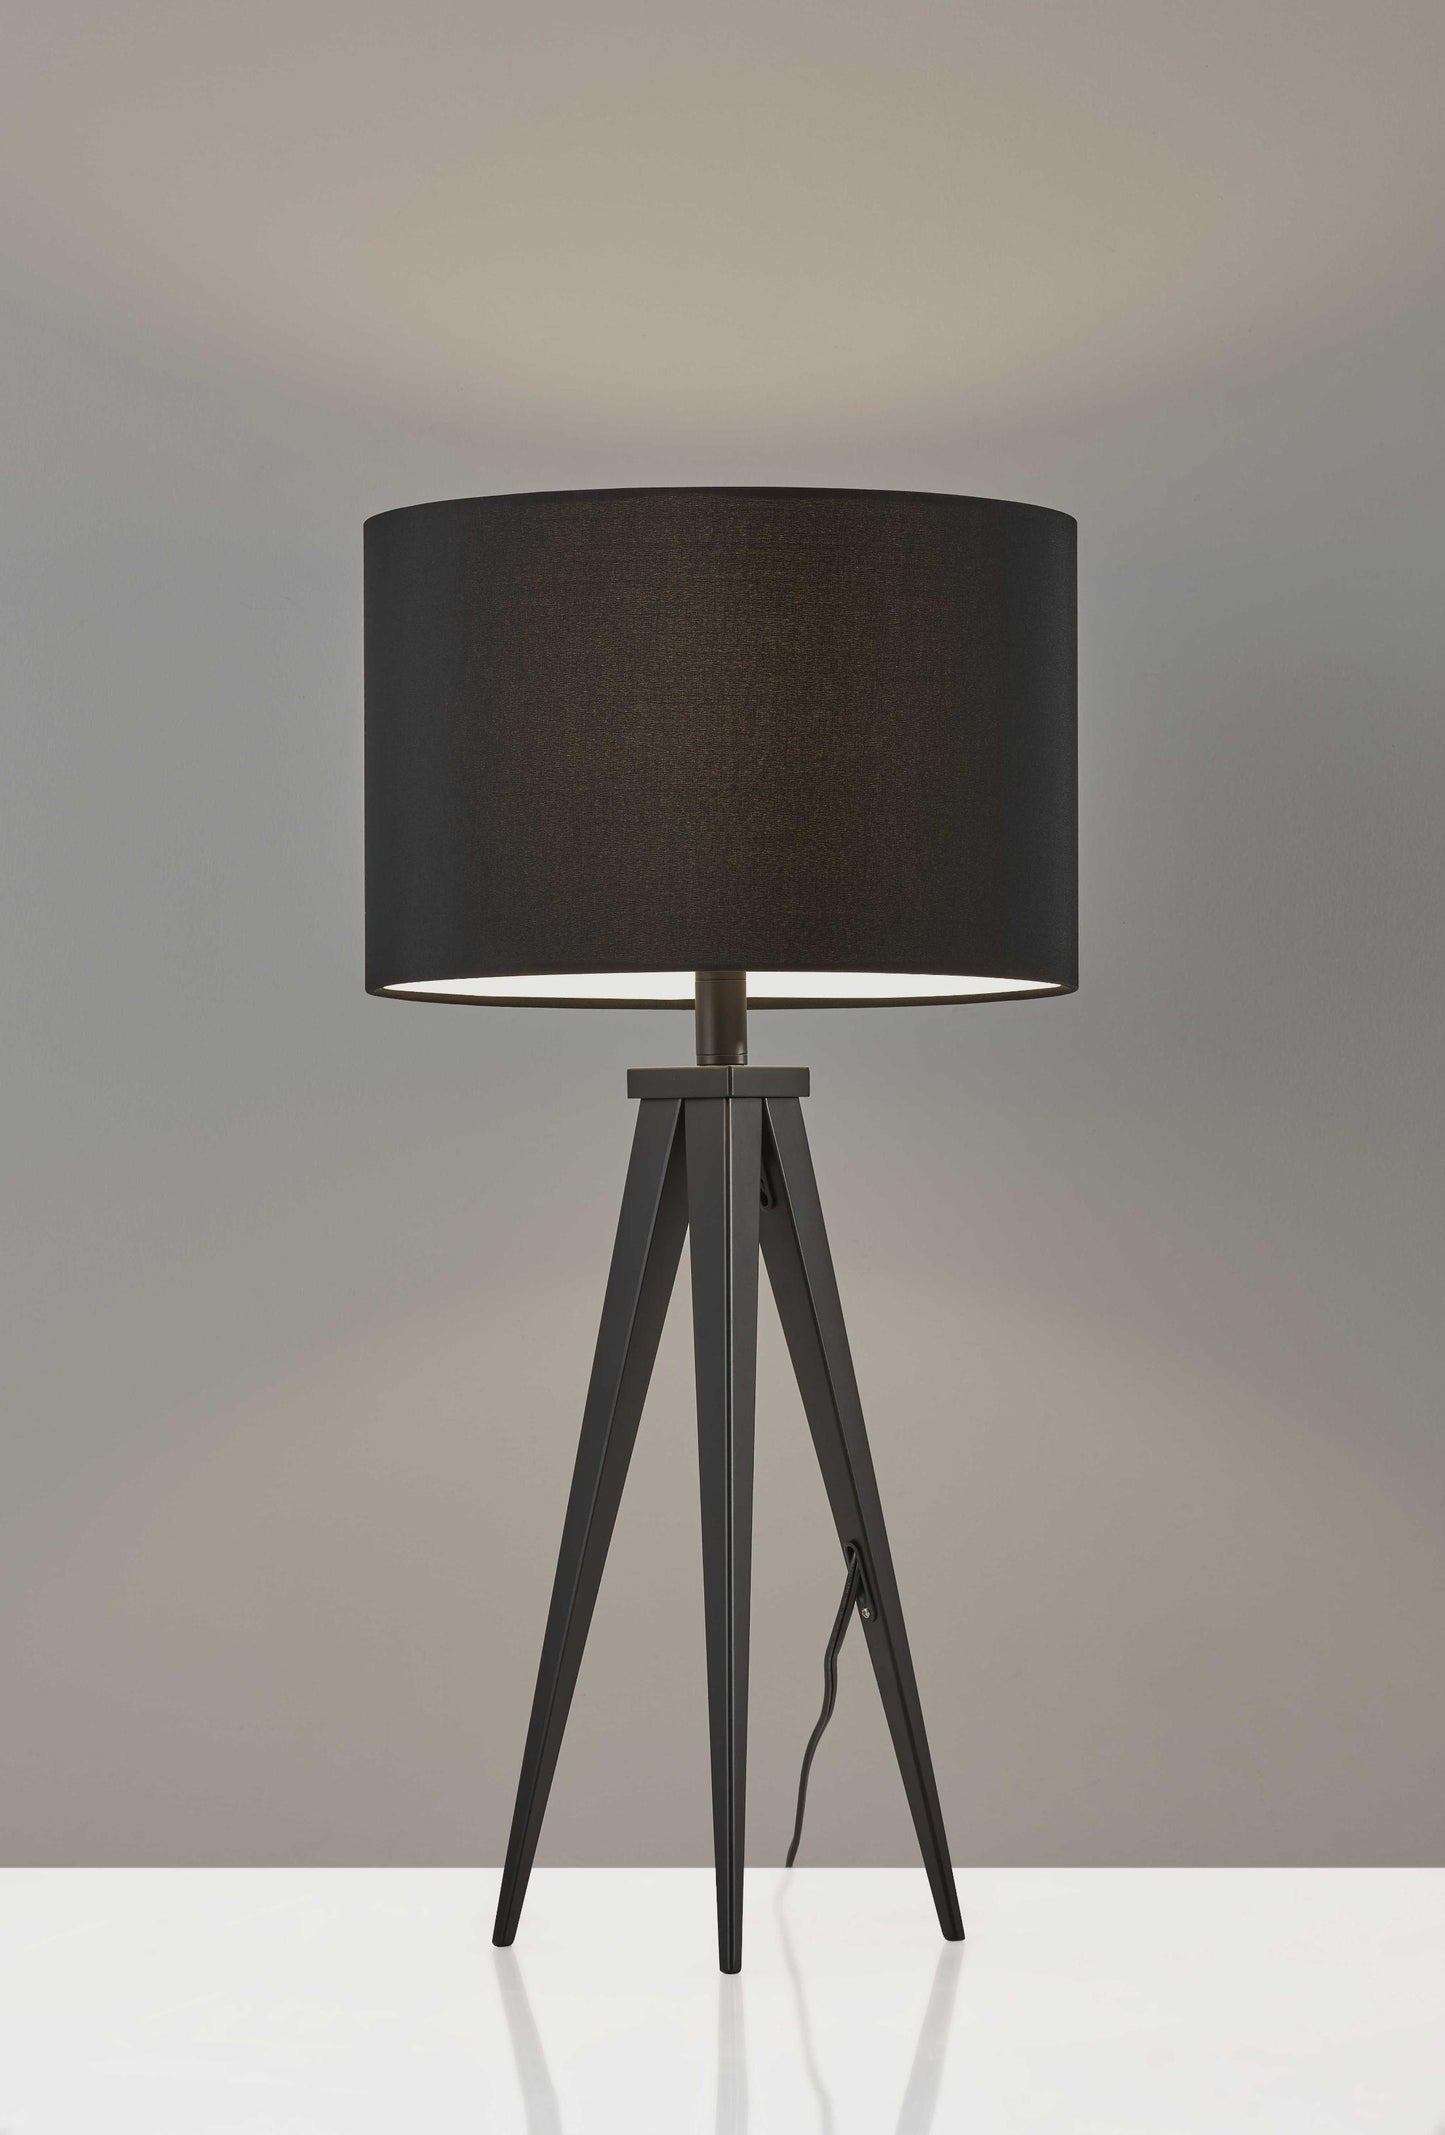 14" X 14" X 28" Black Metal Table Lamp